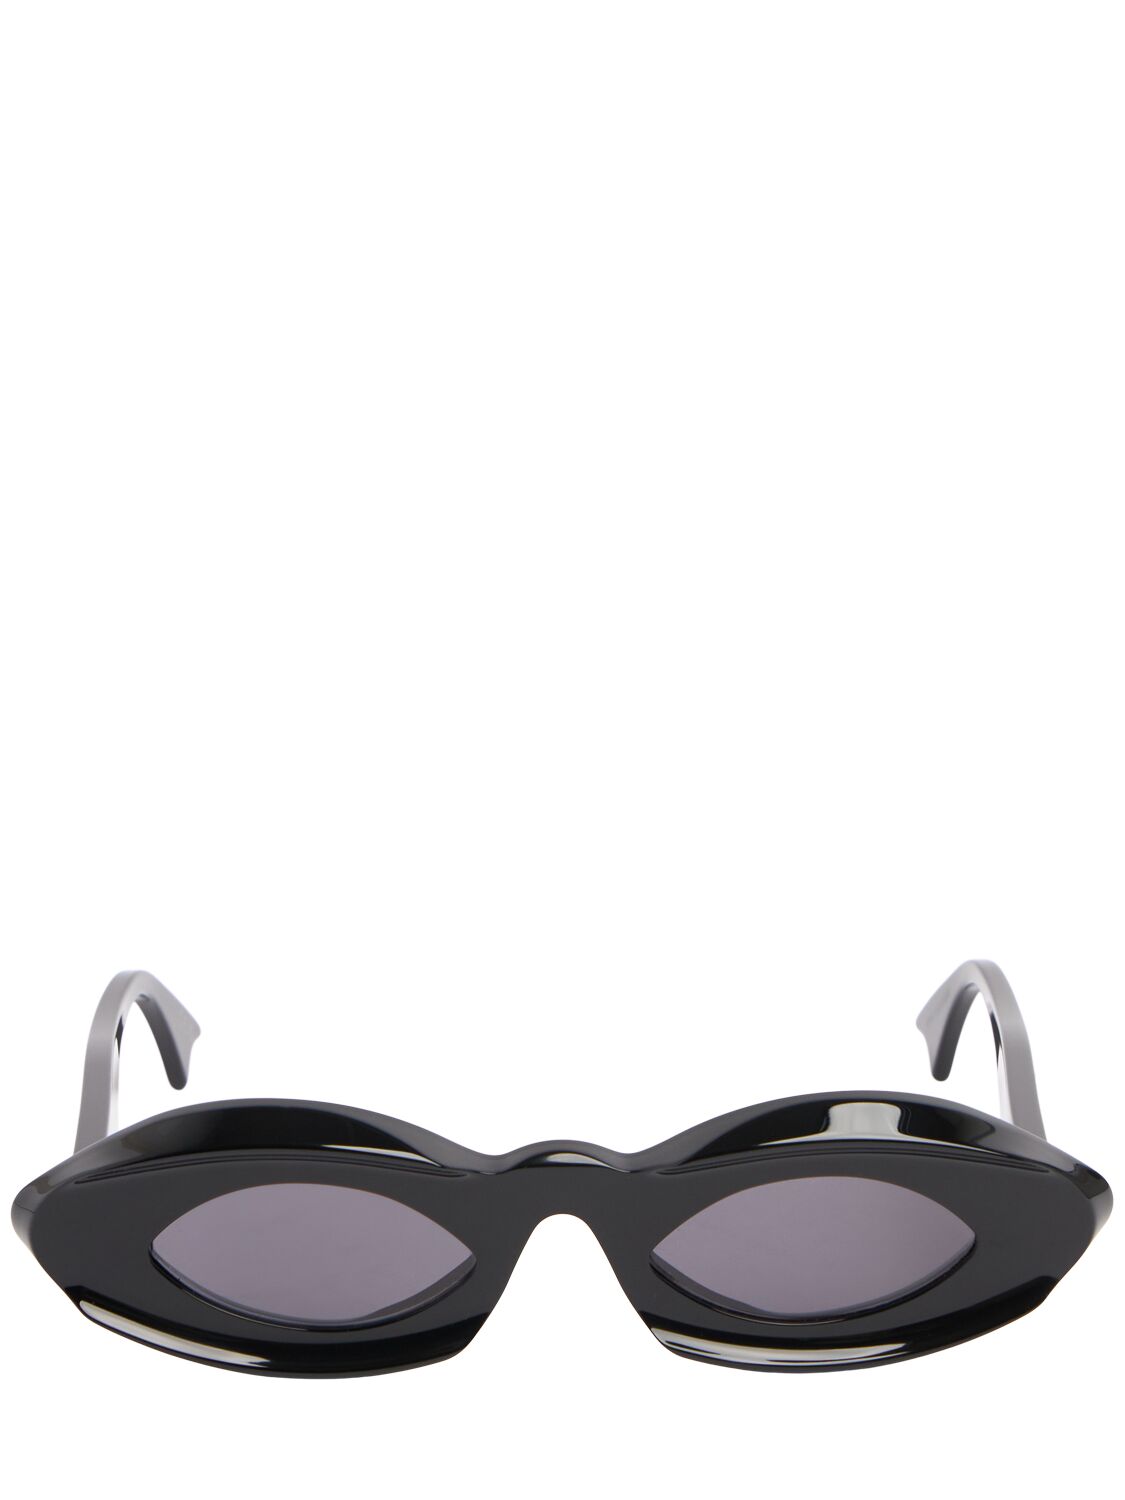 Image of Dark Doodad Black Acetate Sunglasses